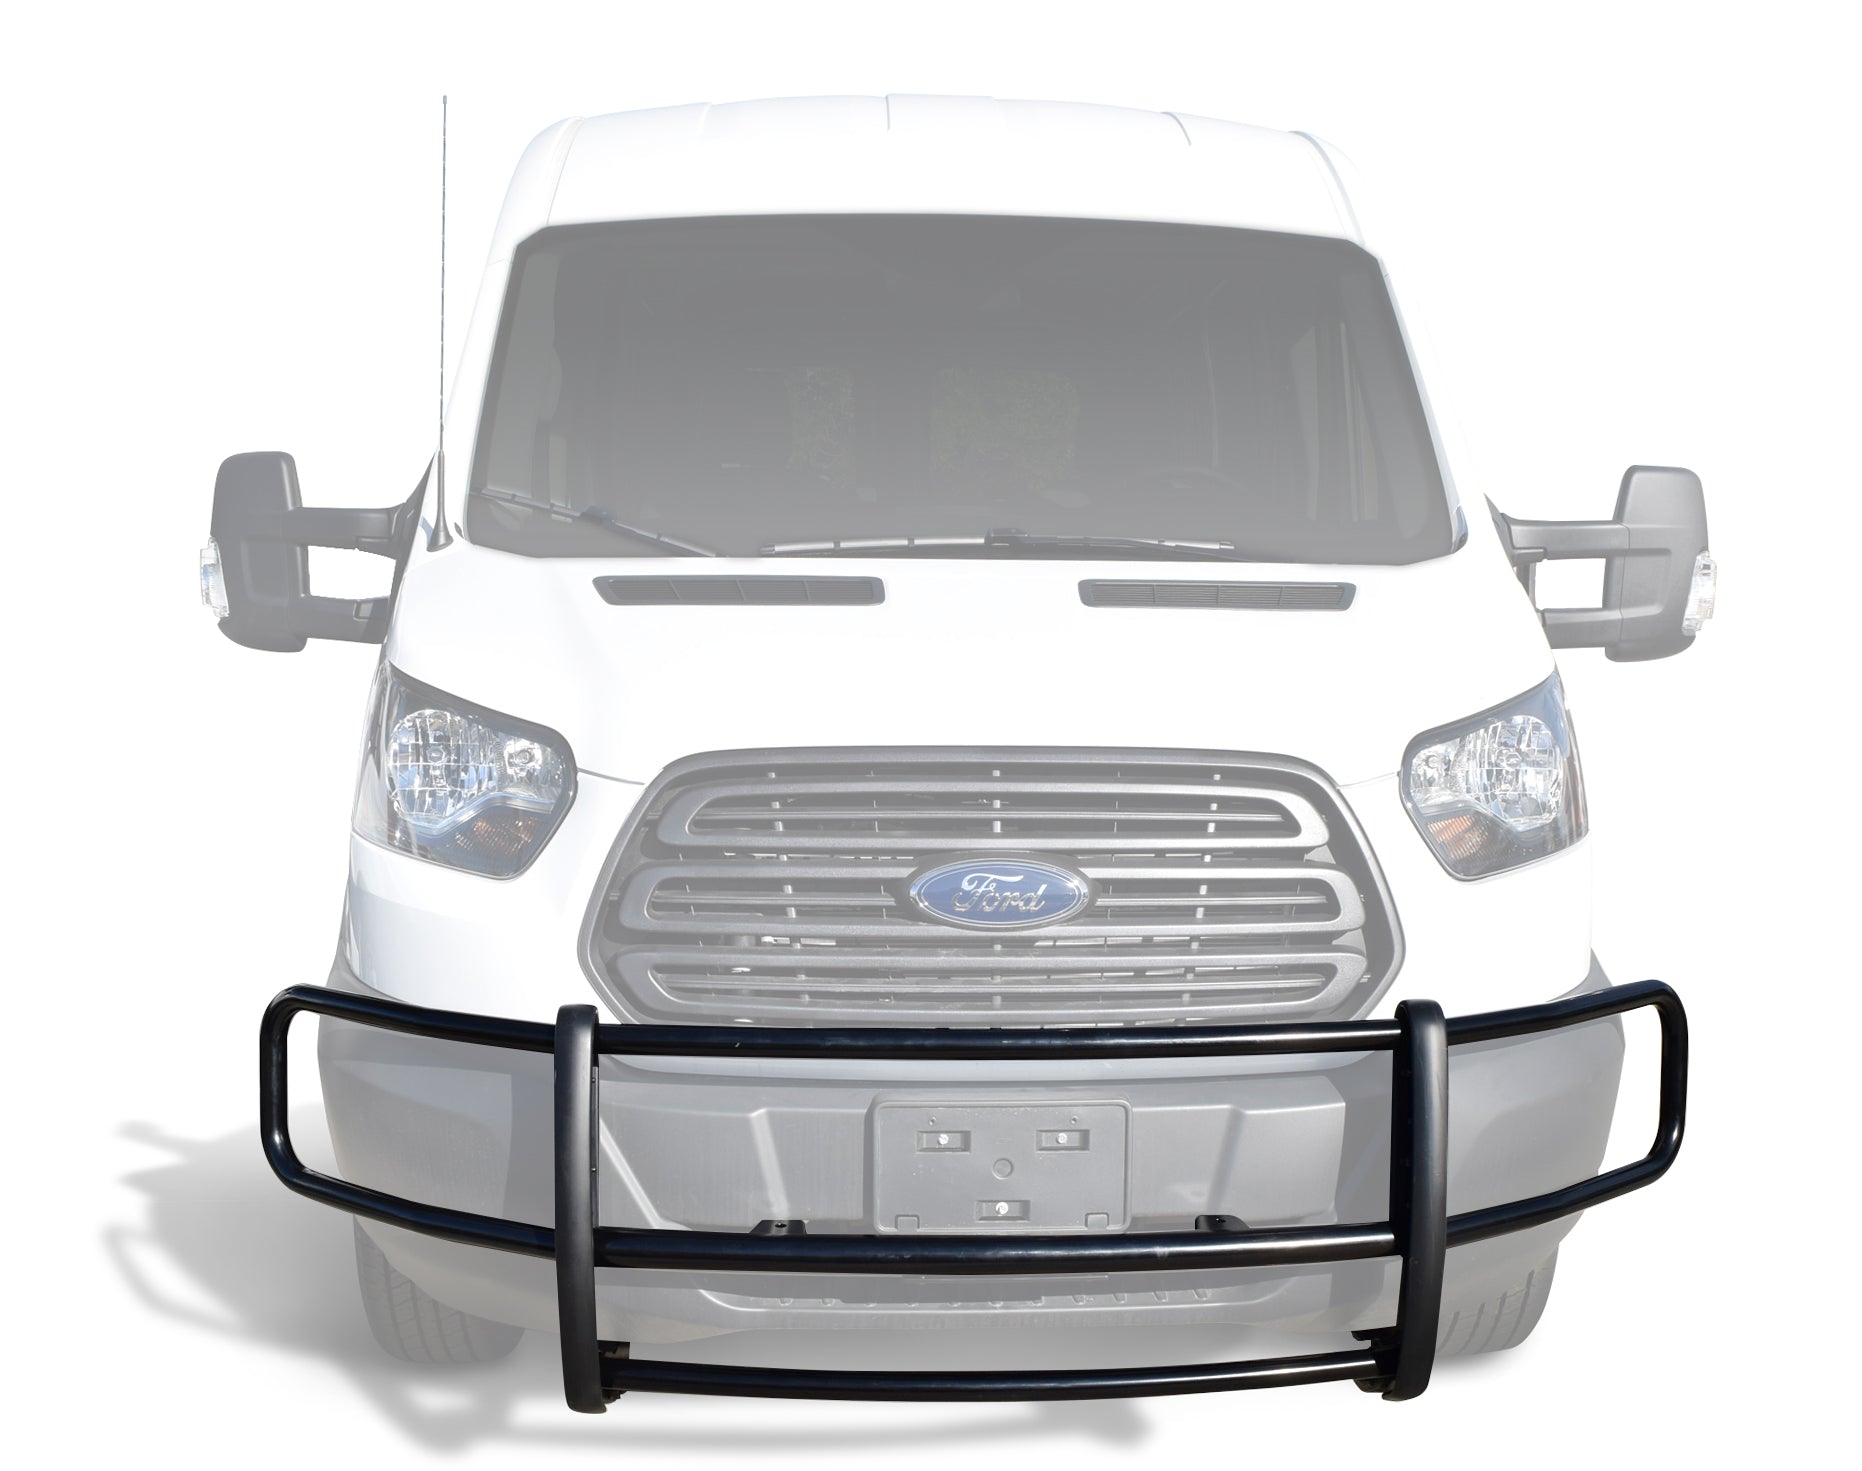 TAC Custom Fit 2015-2018 Ford Transit Van (Full Size) Front Runner Guard BLK Brush Nudge Push Bull Bar - 0